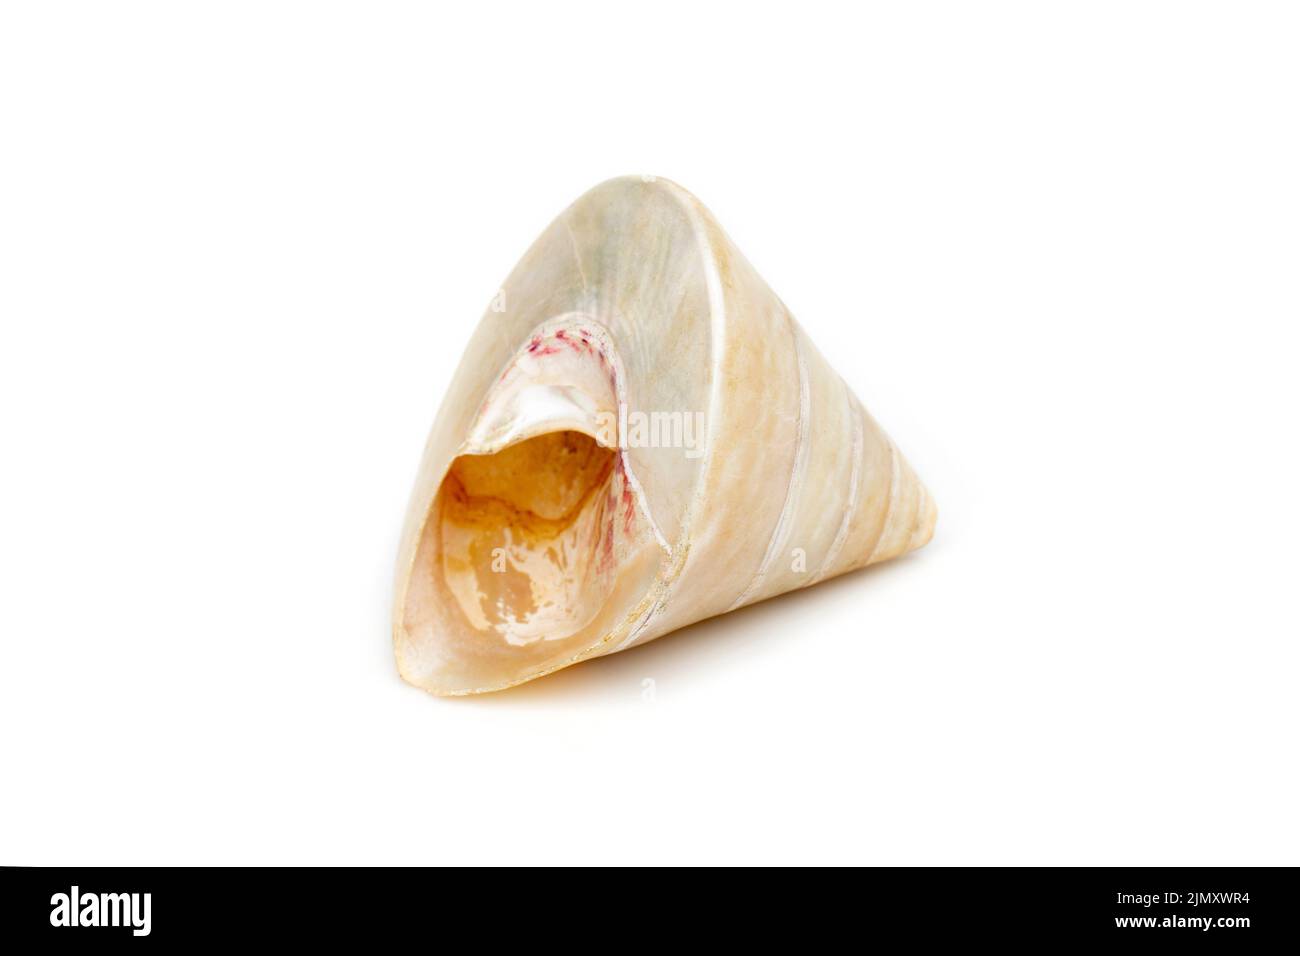 Image of pearl trochus seashells on a white background. Undersea Animals. Sea Shells. Stock Photo